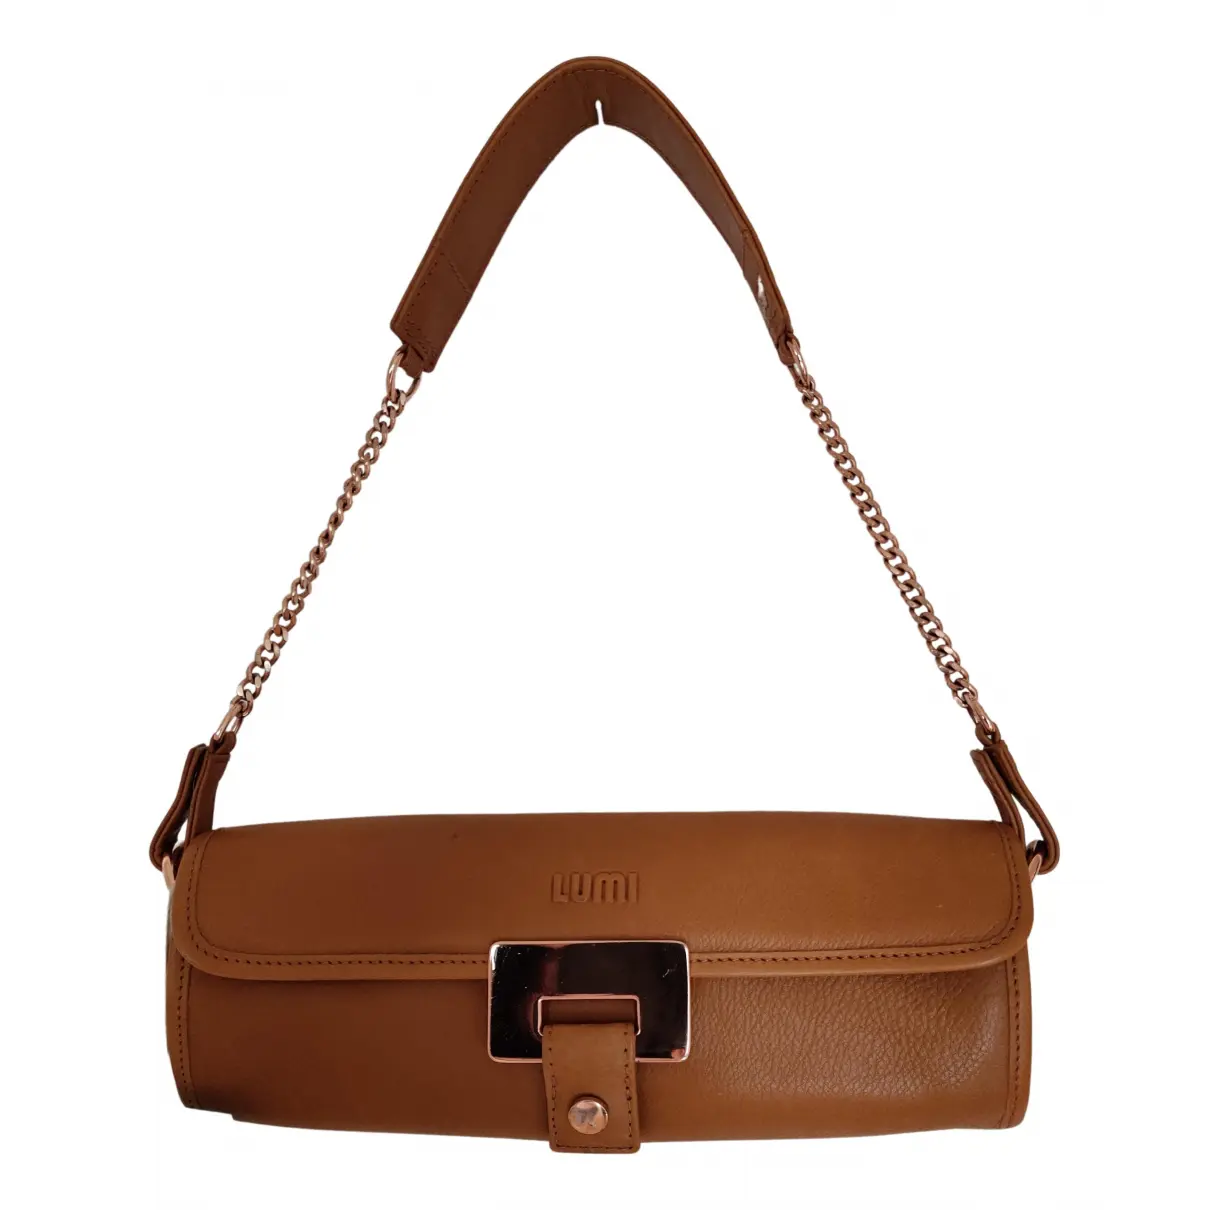 Leather handbag Lumi